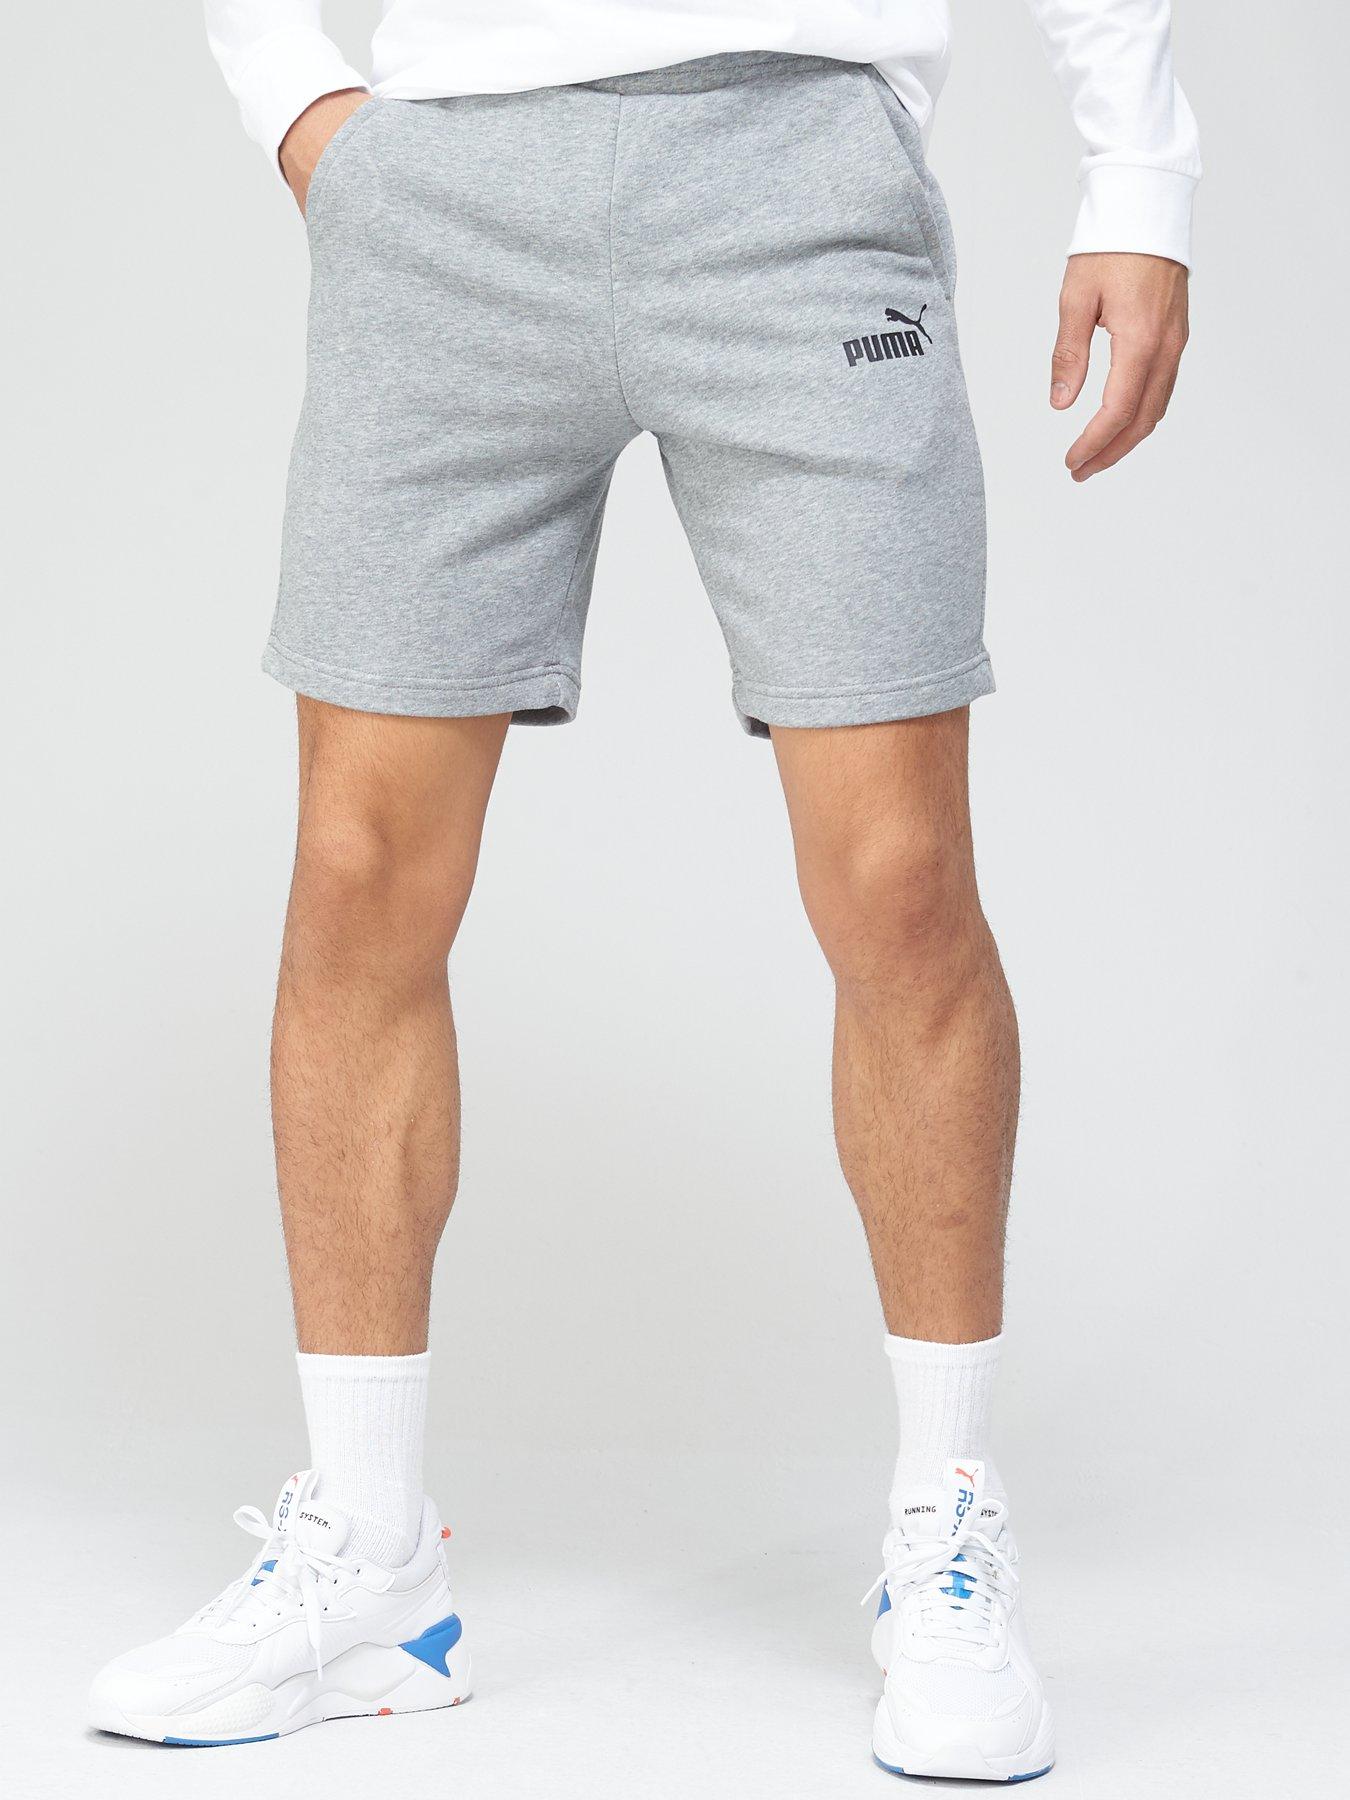 Puma | Shorts Men Very | | Sportswear Ireland 